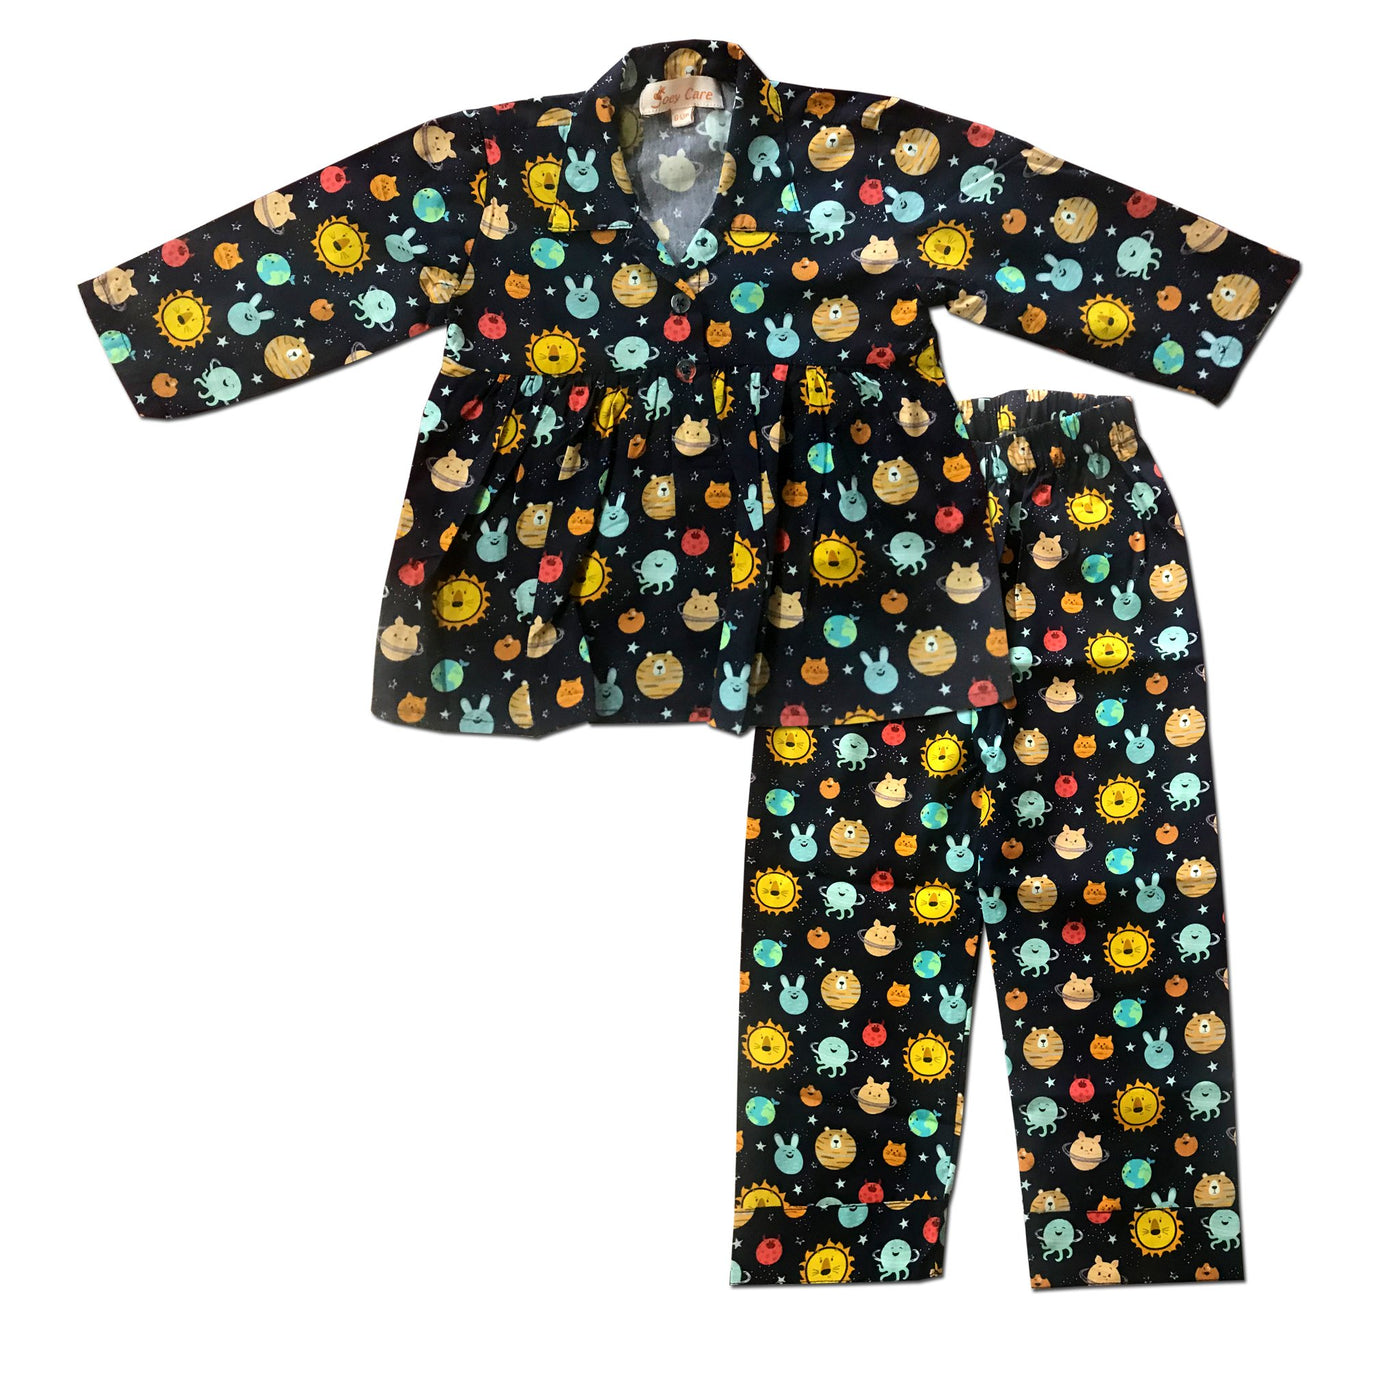 Pyjama set for Girls - Pleats Style Solar System Joey Care